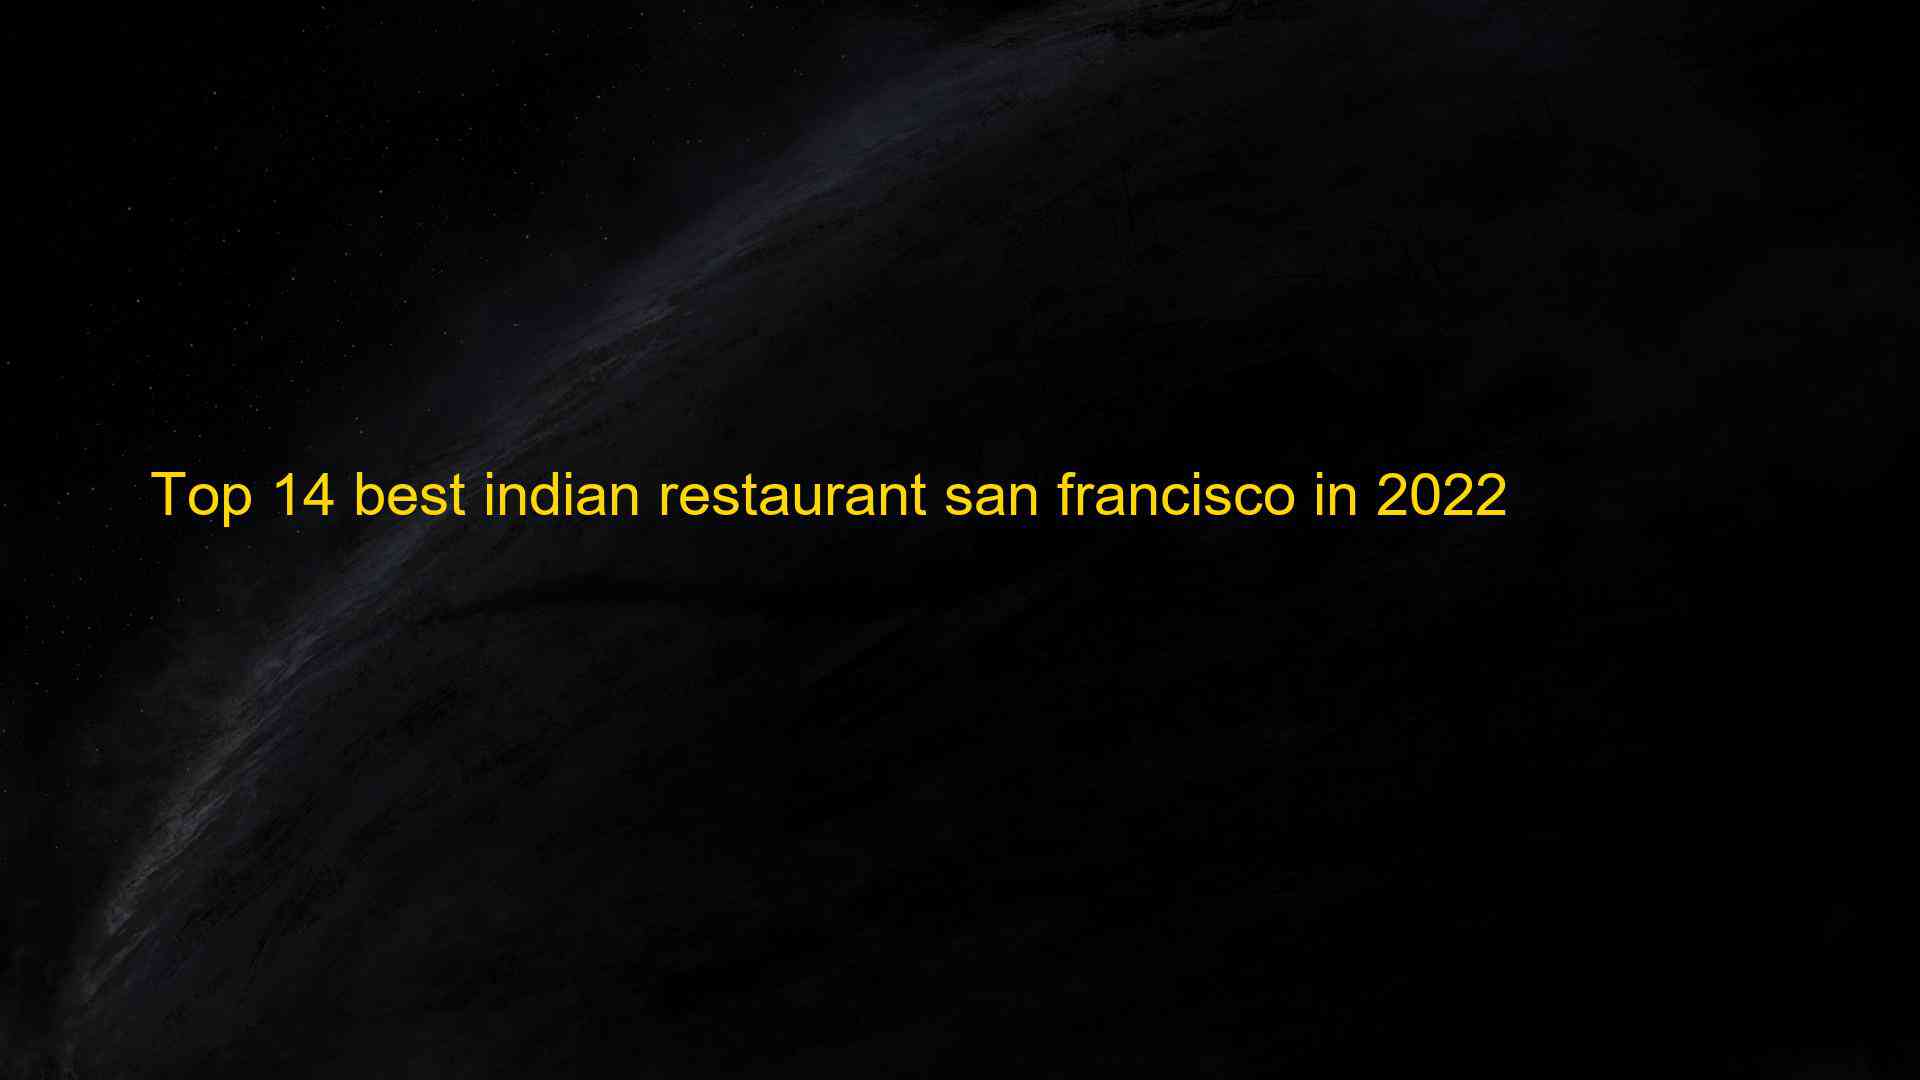 Top 14 best indian restaurant san francisco in 2022 1662841370